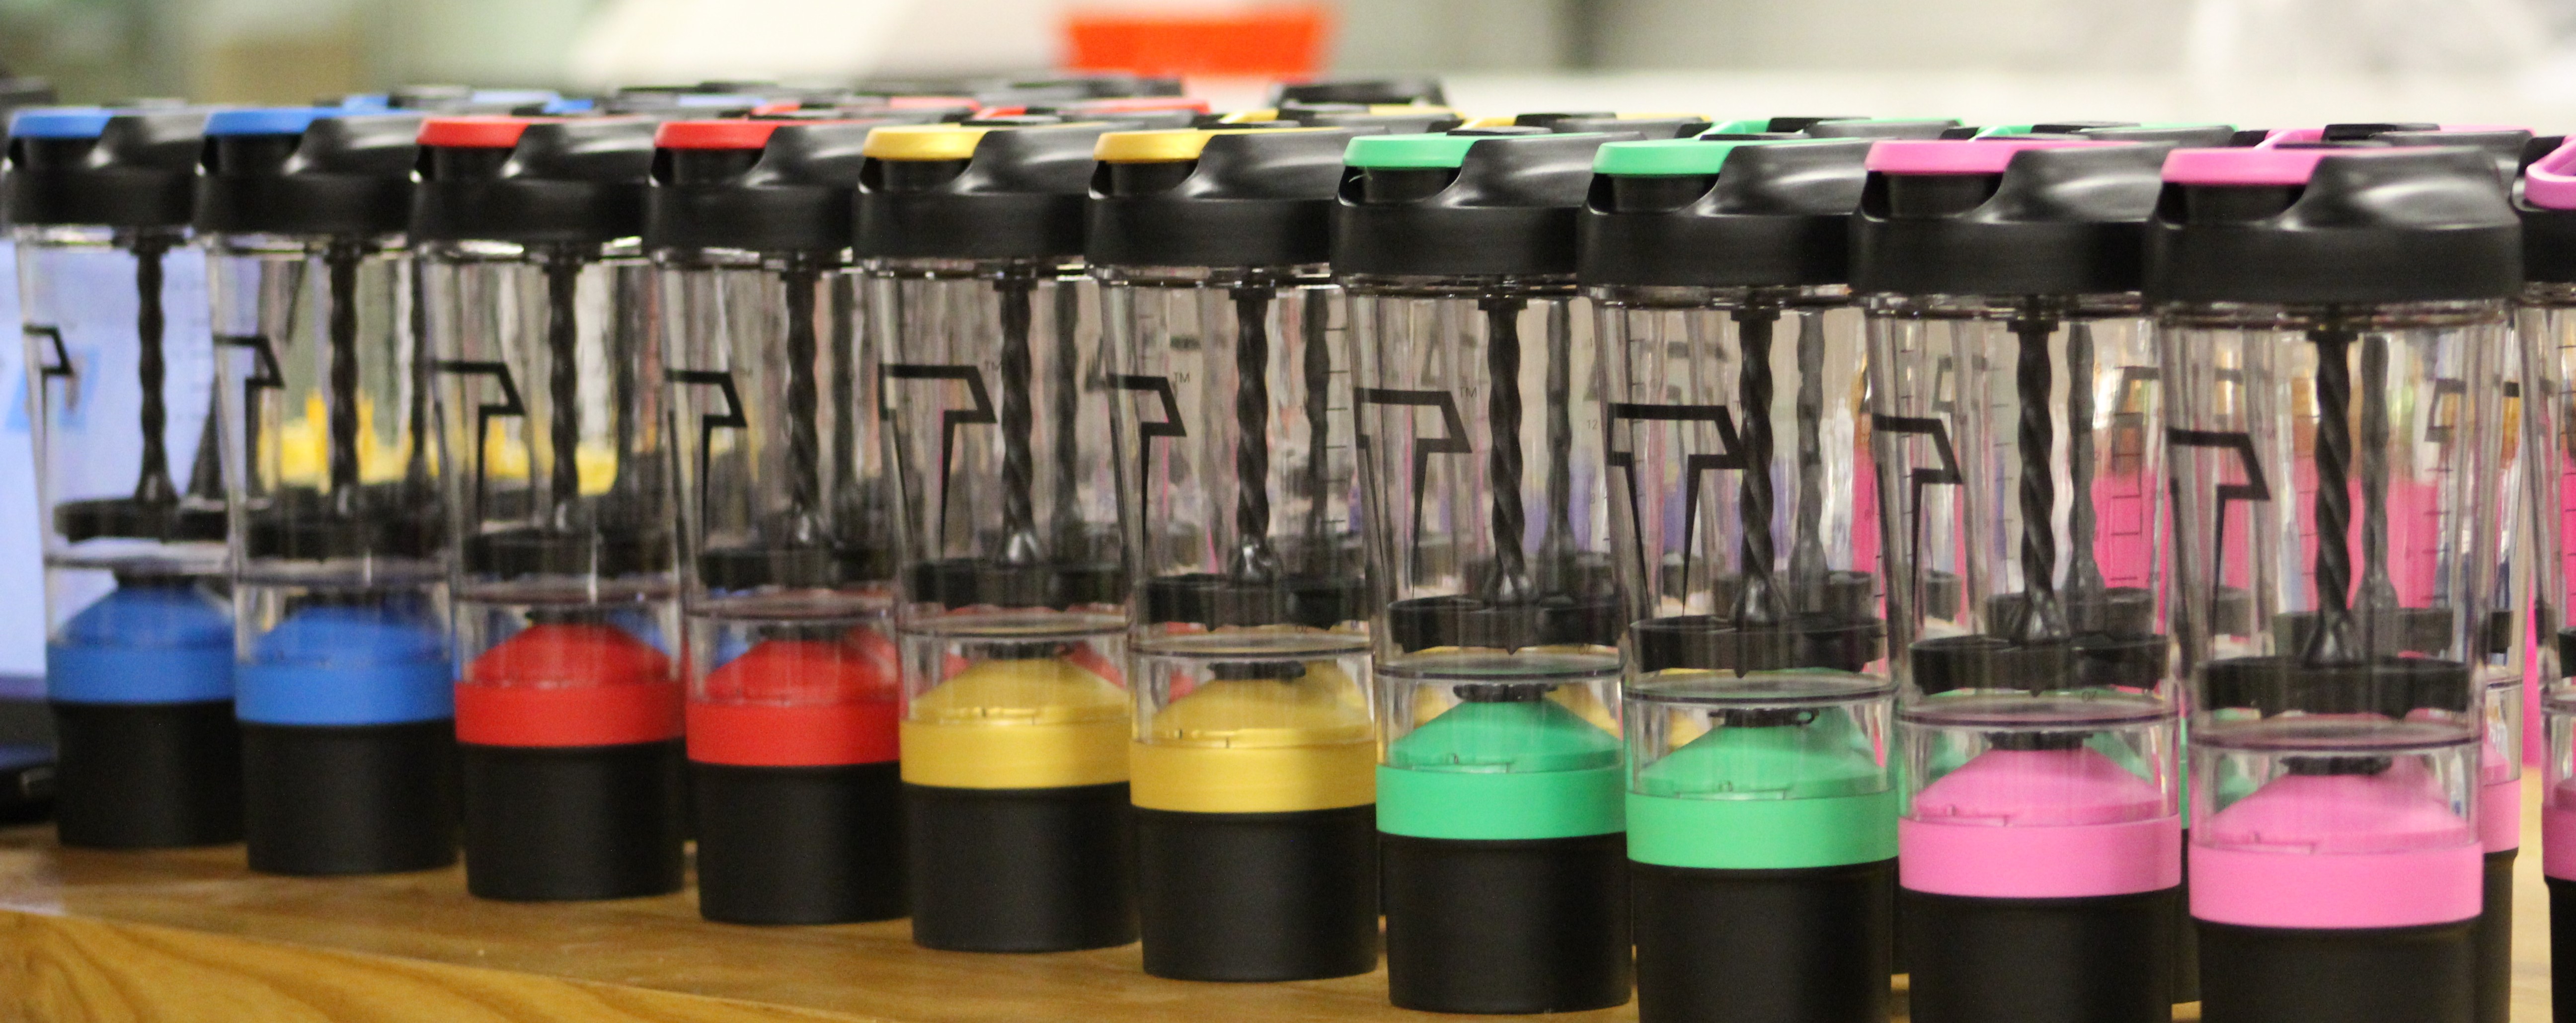 The Revolutionary Protein Shaker – Product Hunt Columbus Recap: TITAN Mixer Bottles